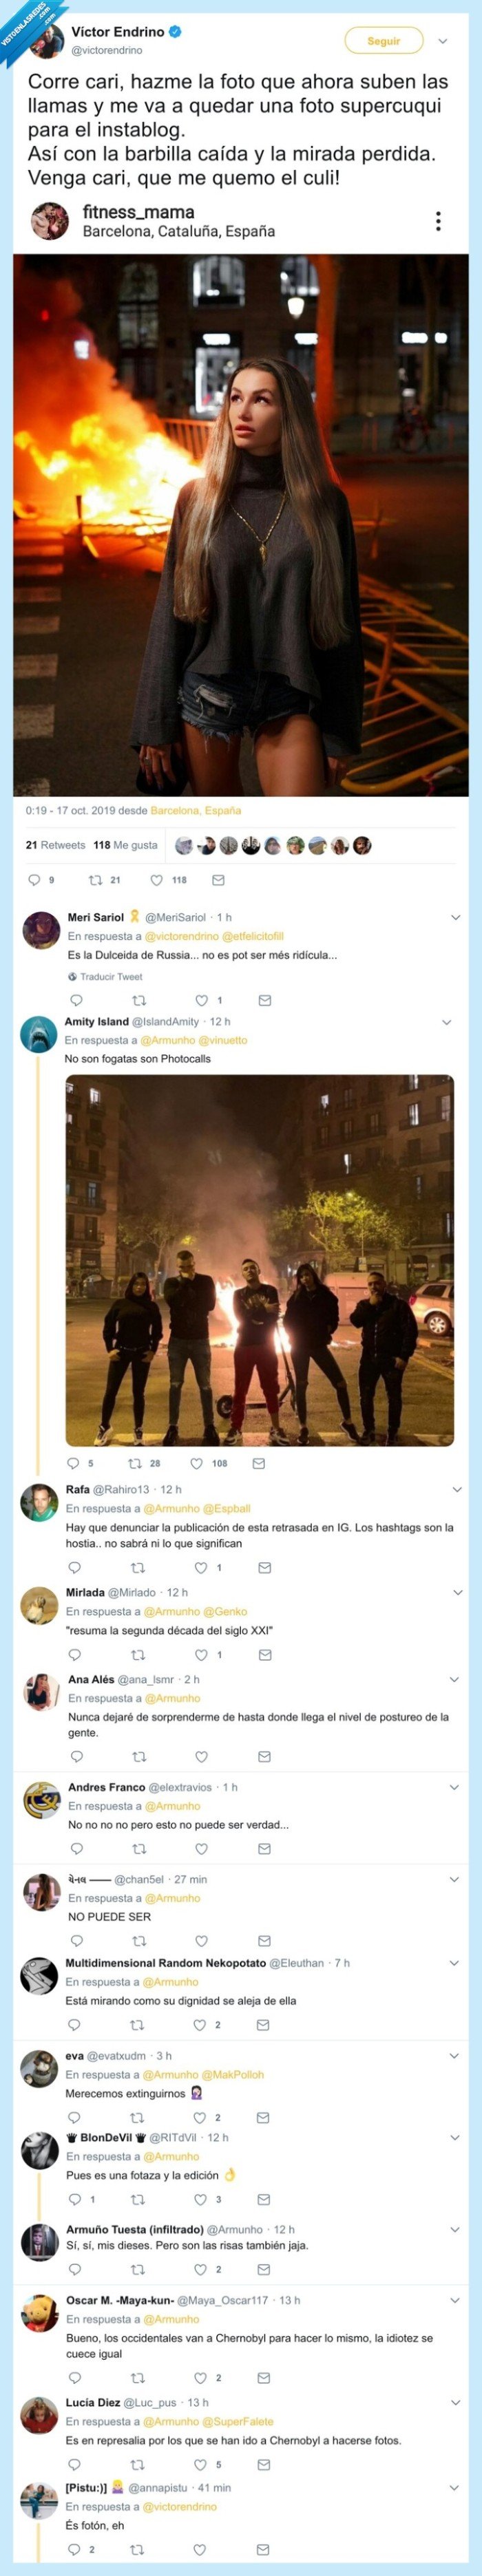 fintess_mama,rusa,barcelona,disturbios